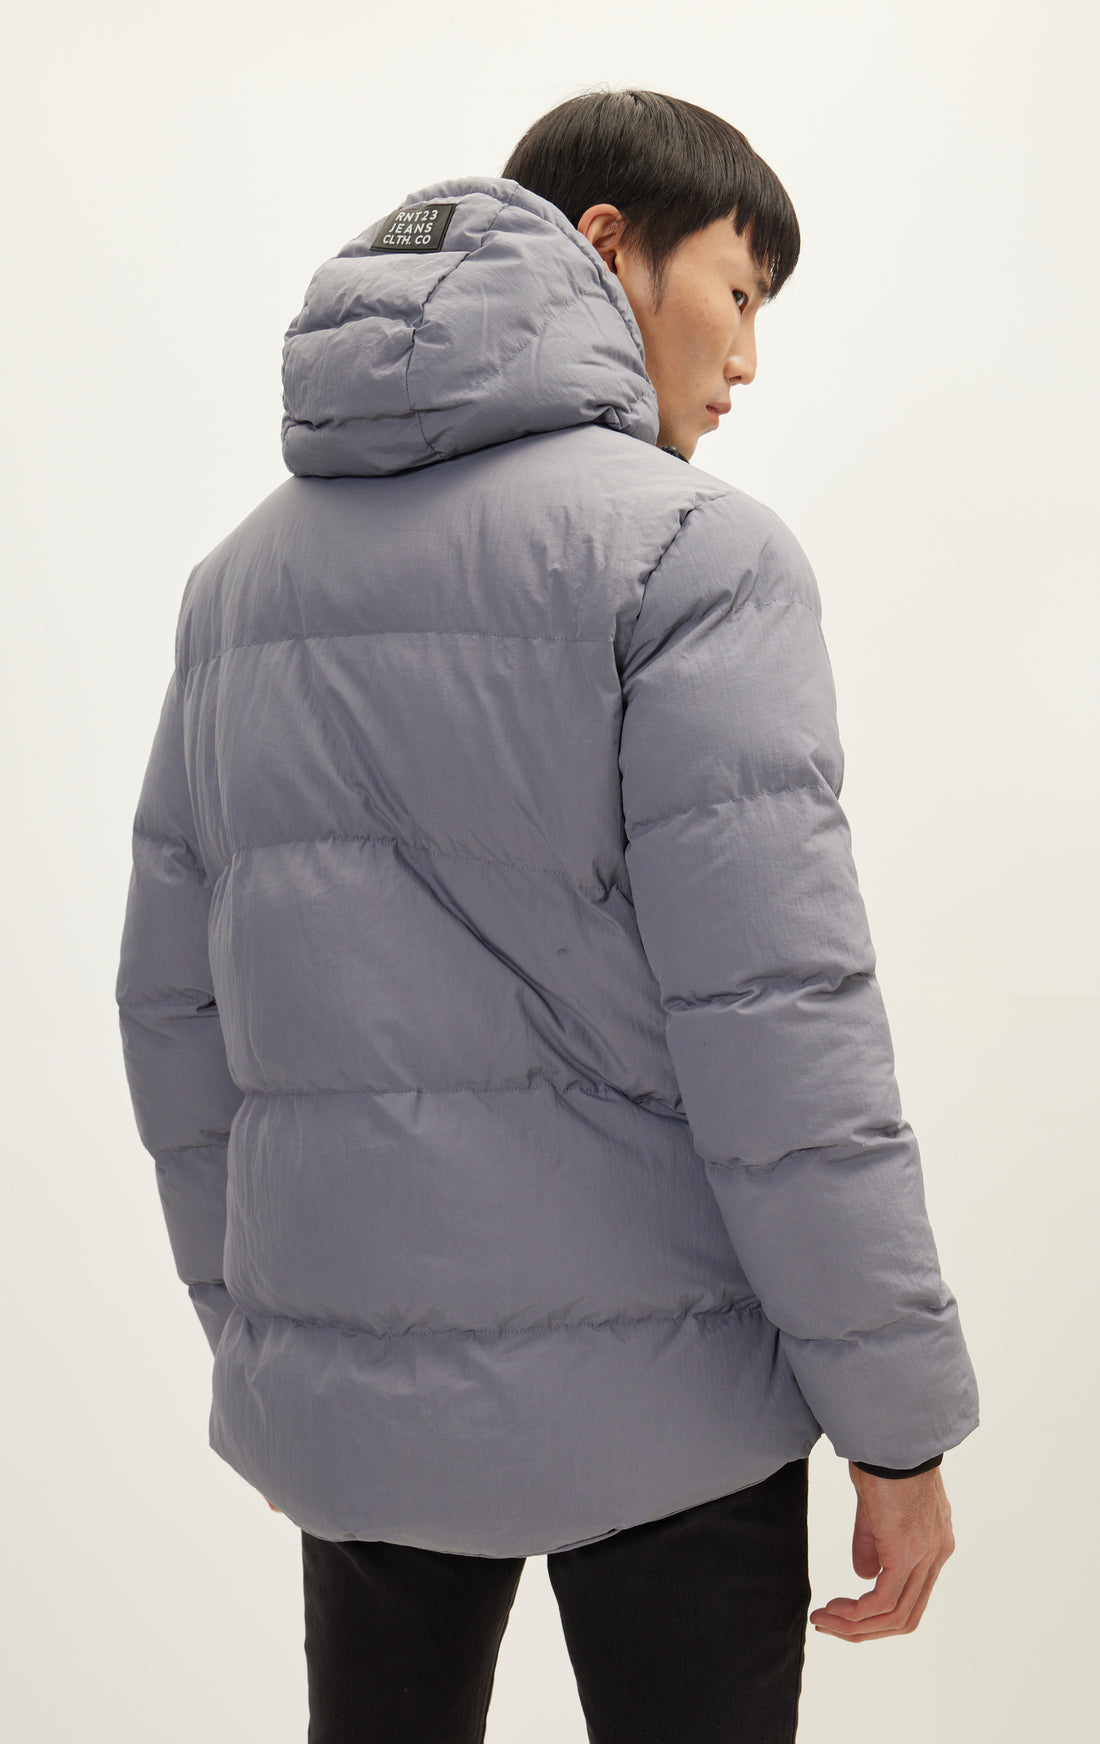 Nr. 71269 Wattierter Mantel mit Kapuze – Grau